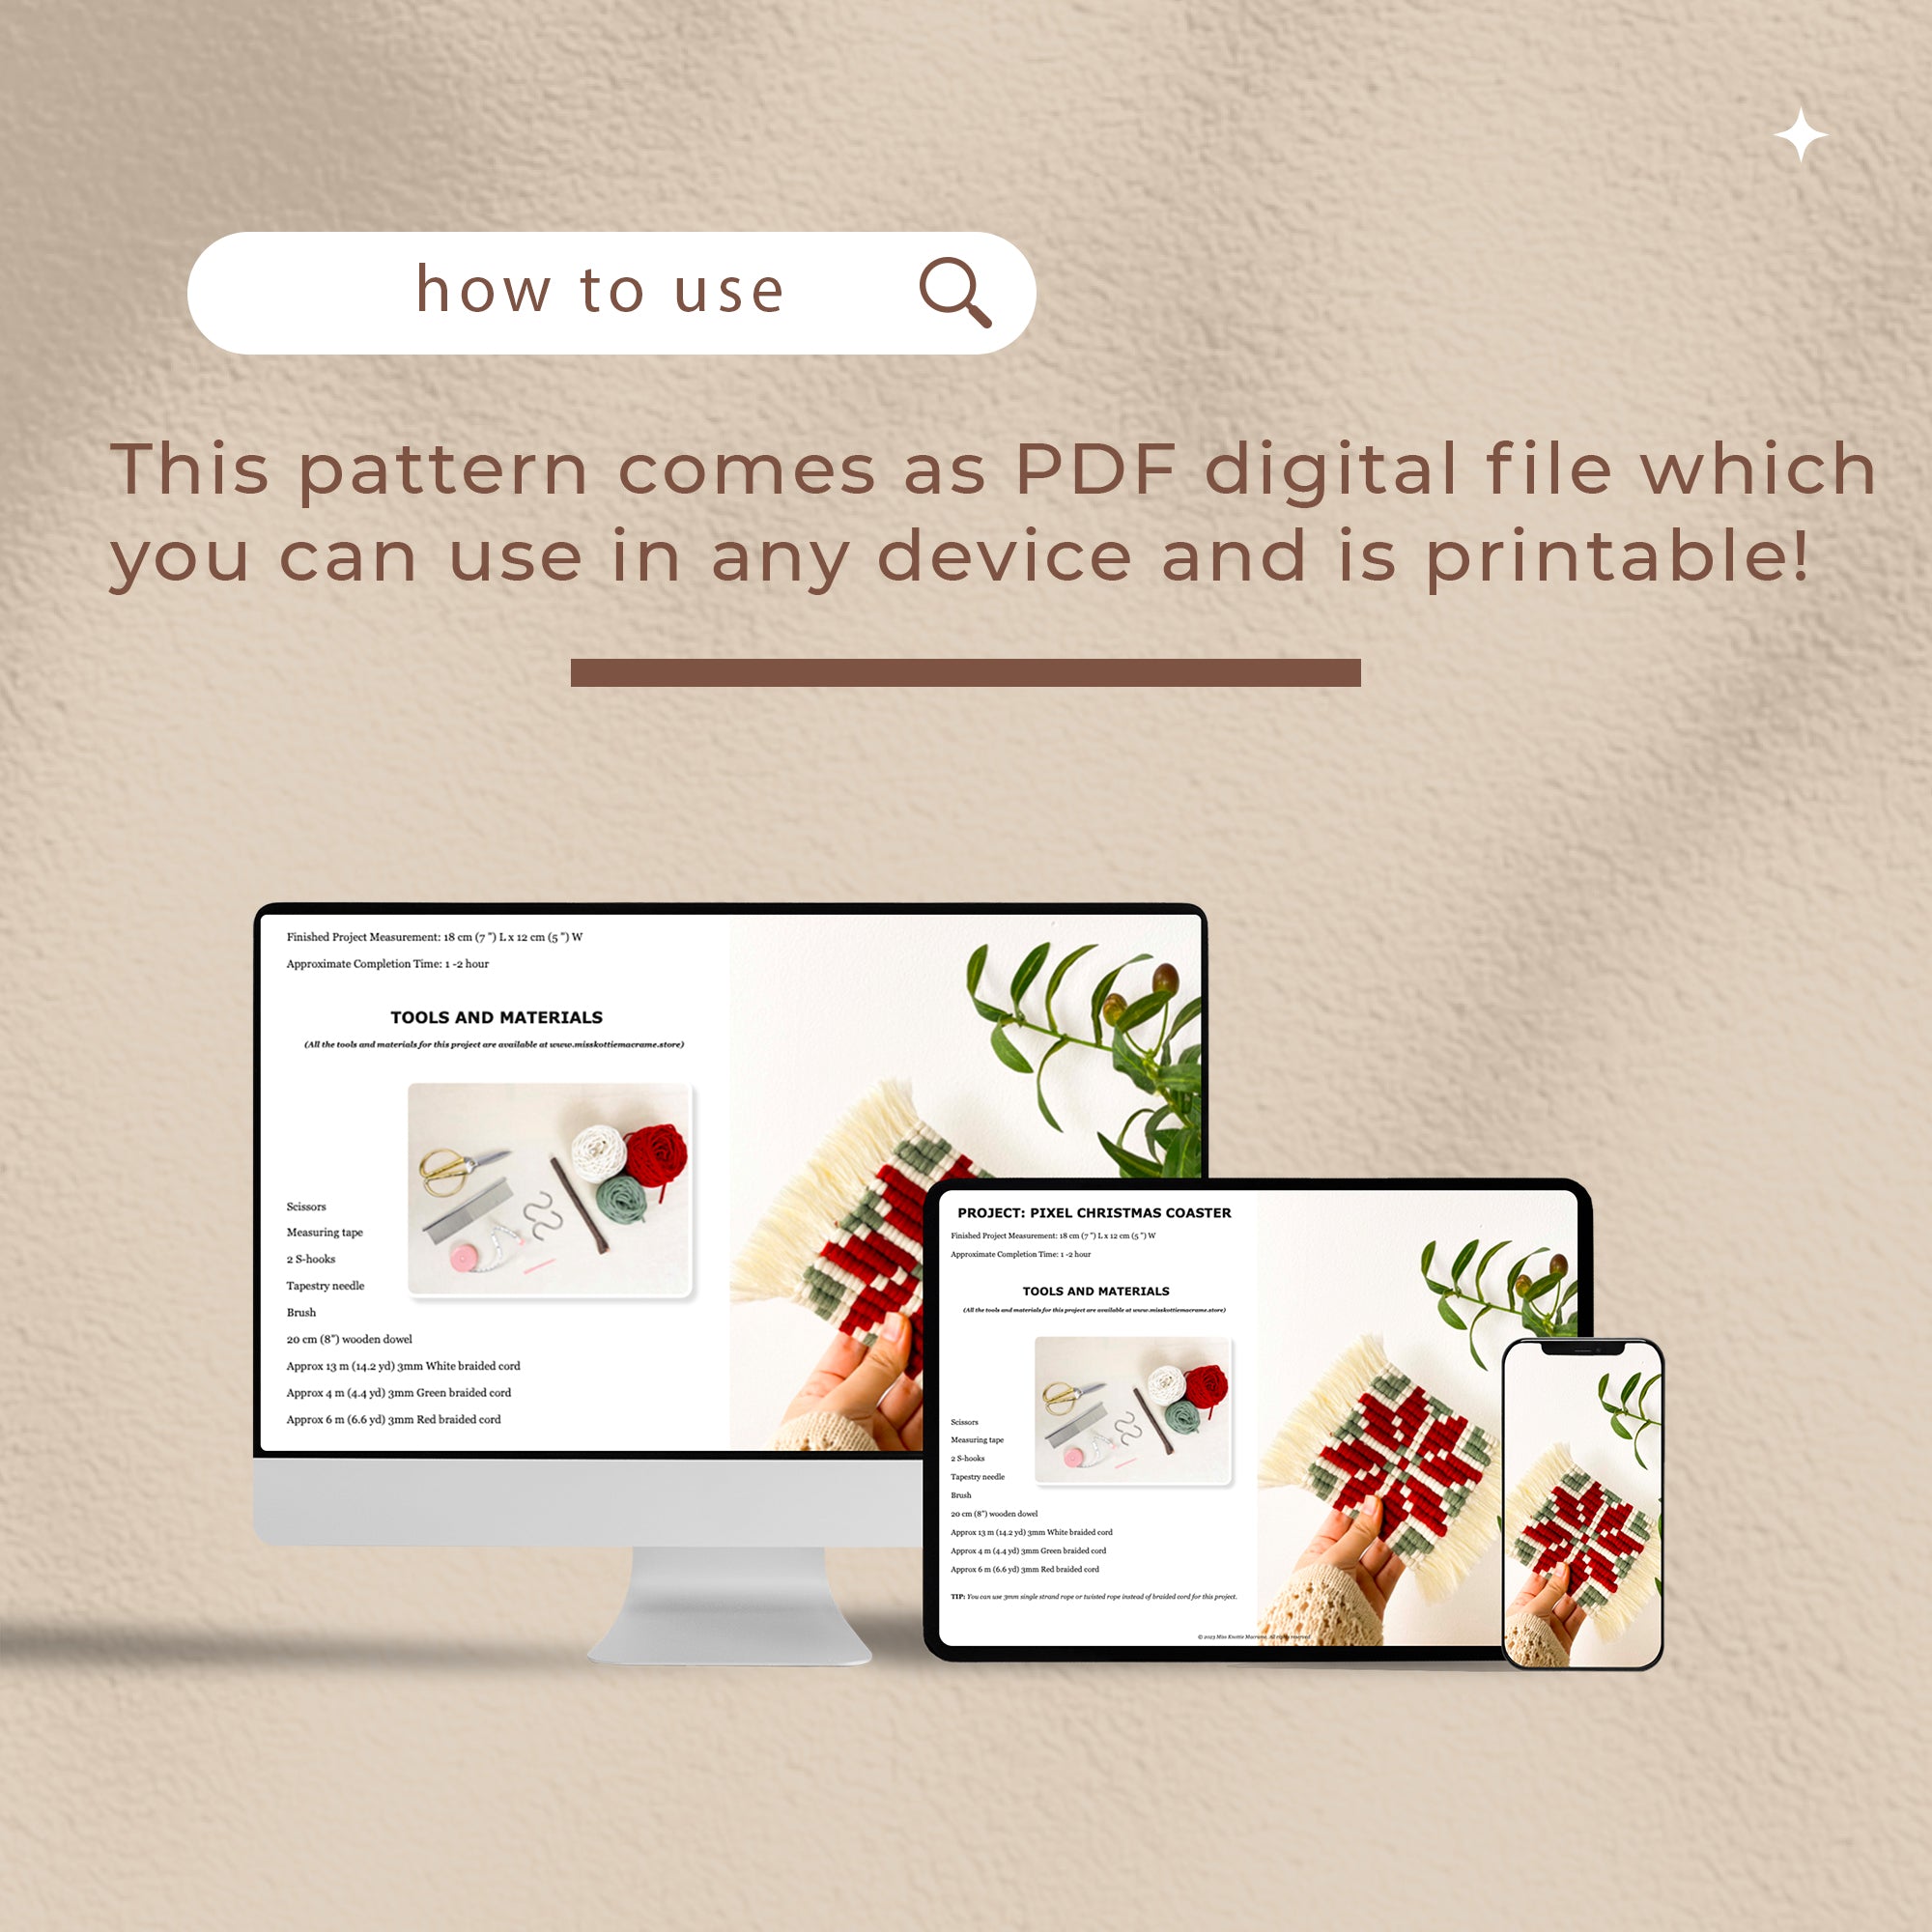 Pixel Christmas Coaster Pattern-Guida digitale PDF e Nastri